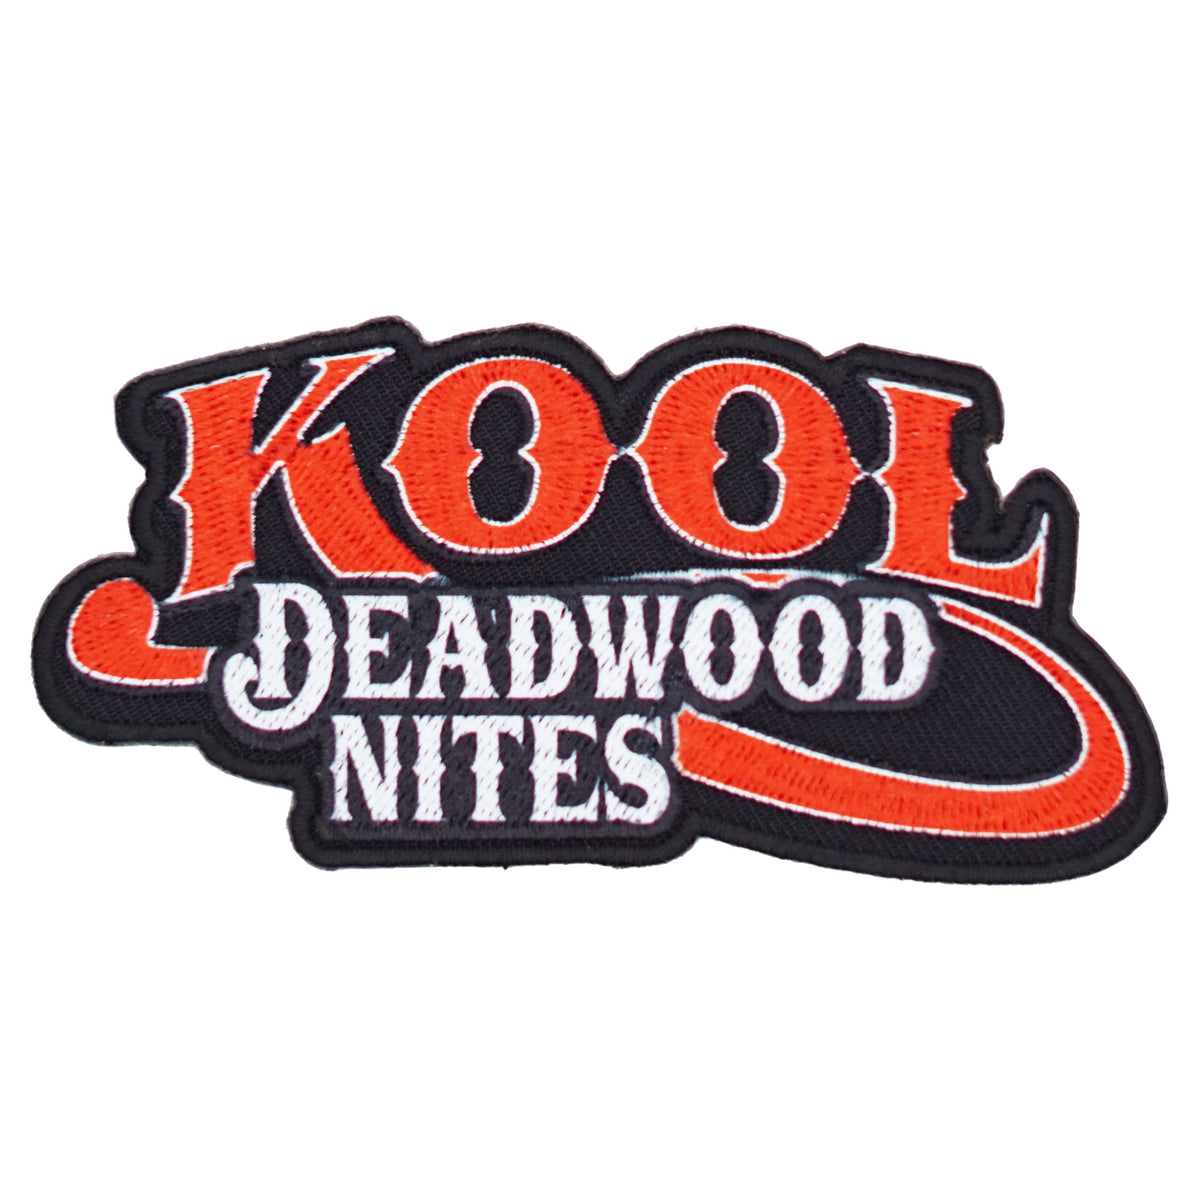 Kool Deadwood Nites Iron On Patches RedOrange KDN Logo Kool